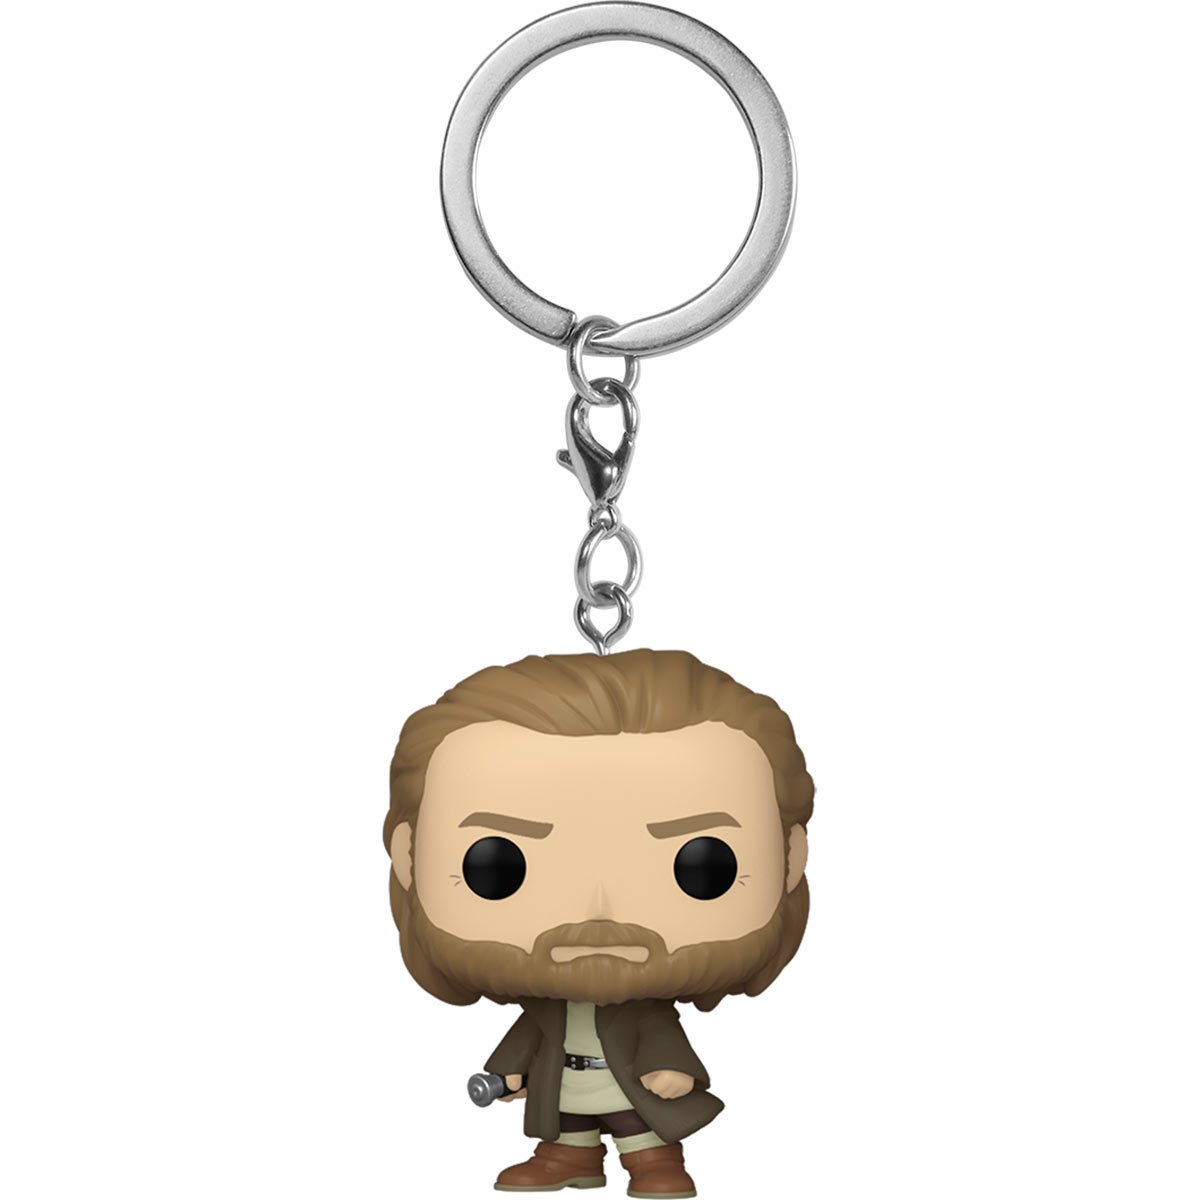 Obi-Wan Kenobi Figural Clip Details about   Star Wars NEW Keychain Monogram Key Chain ANH 